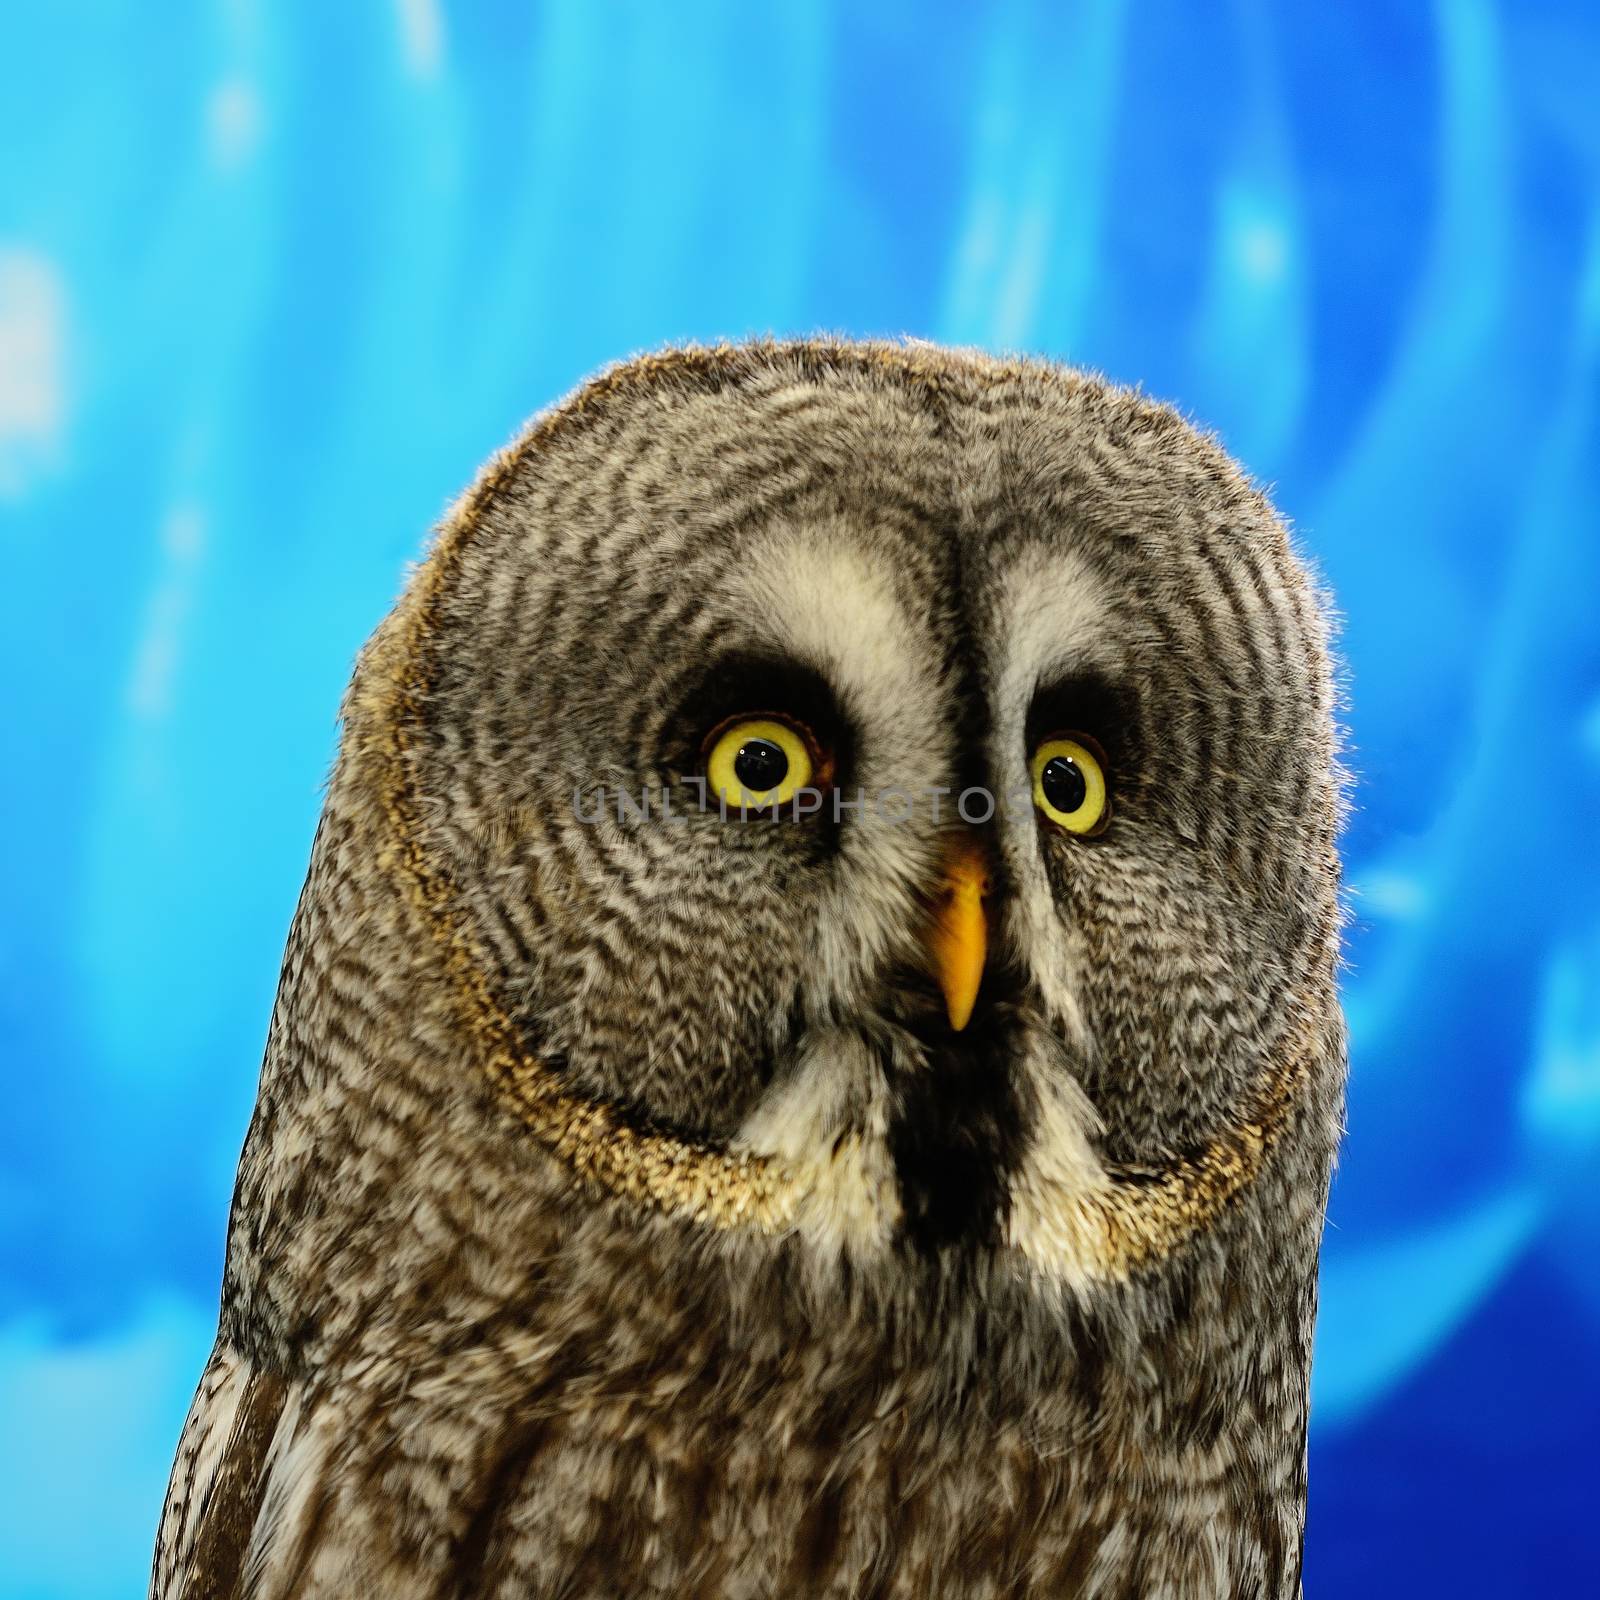 Portrait of Great Grey Owl or Lapland Owl (Strix nebulosa), face profile